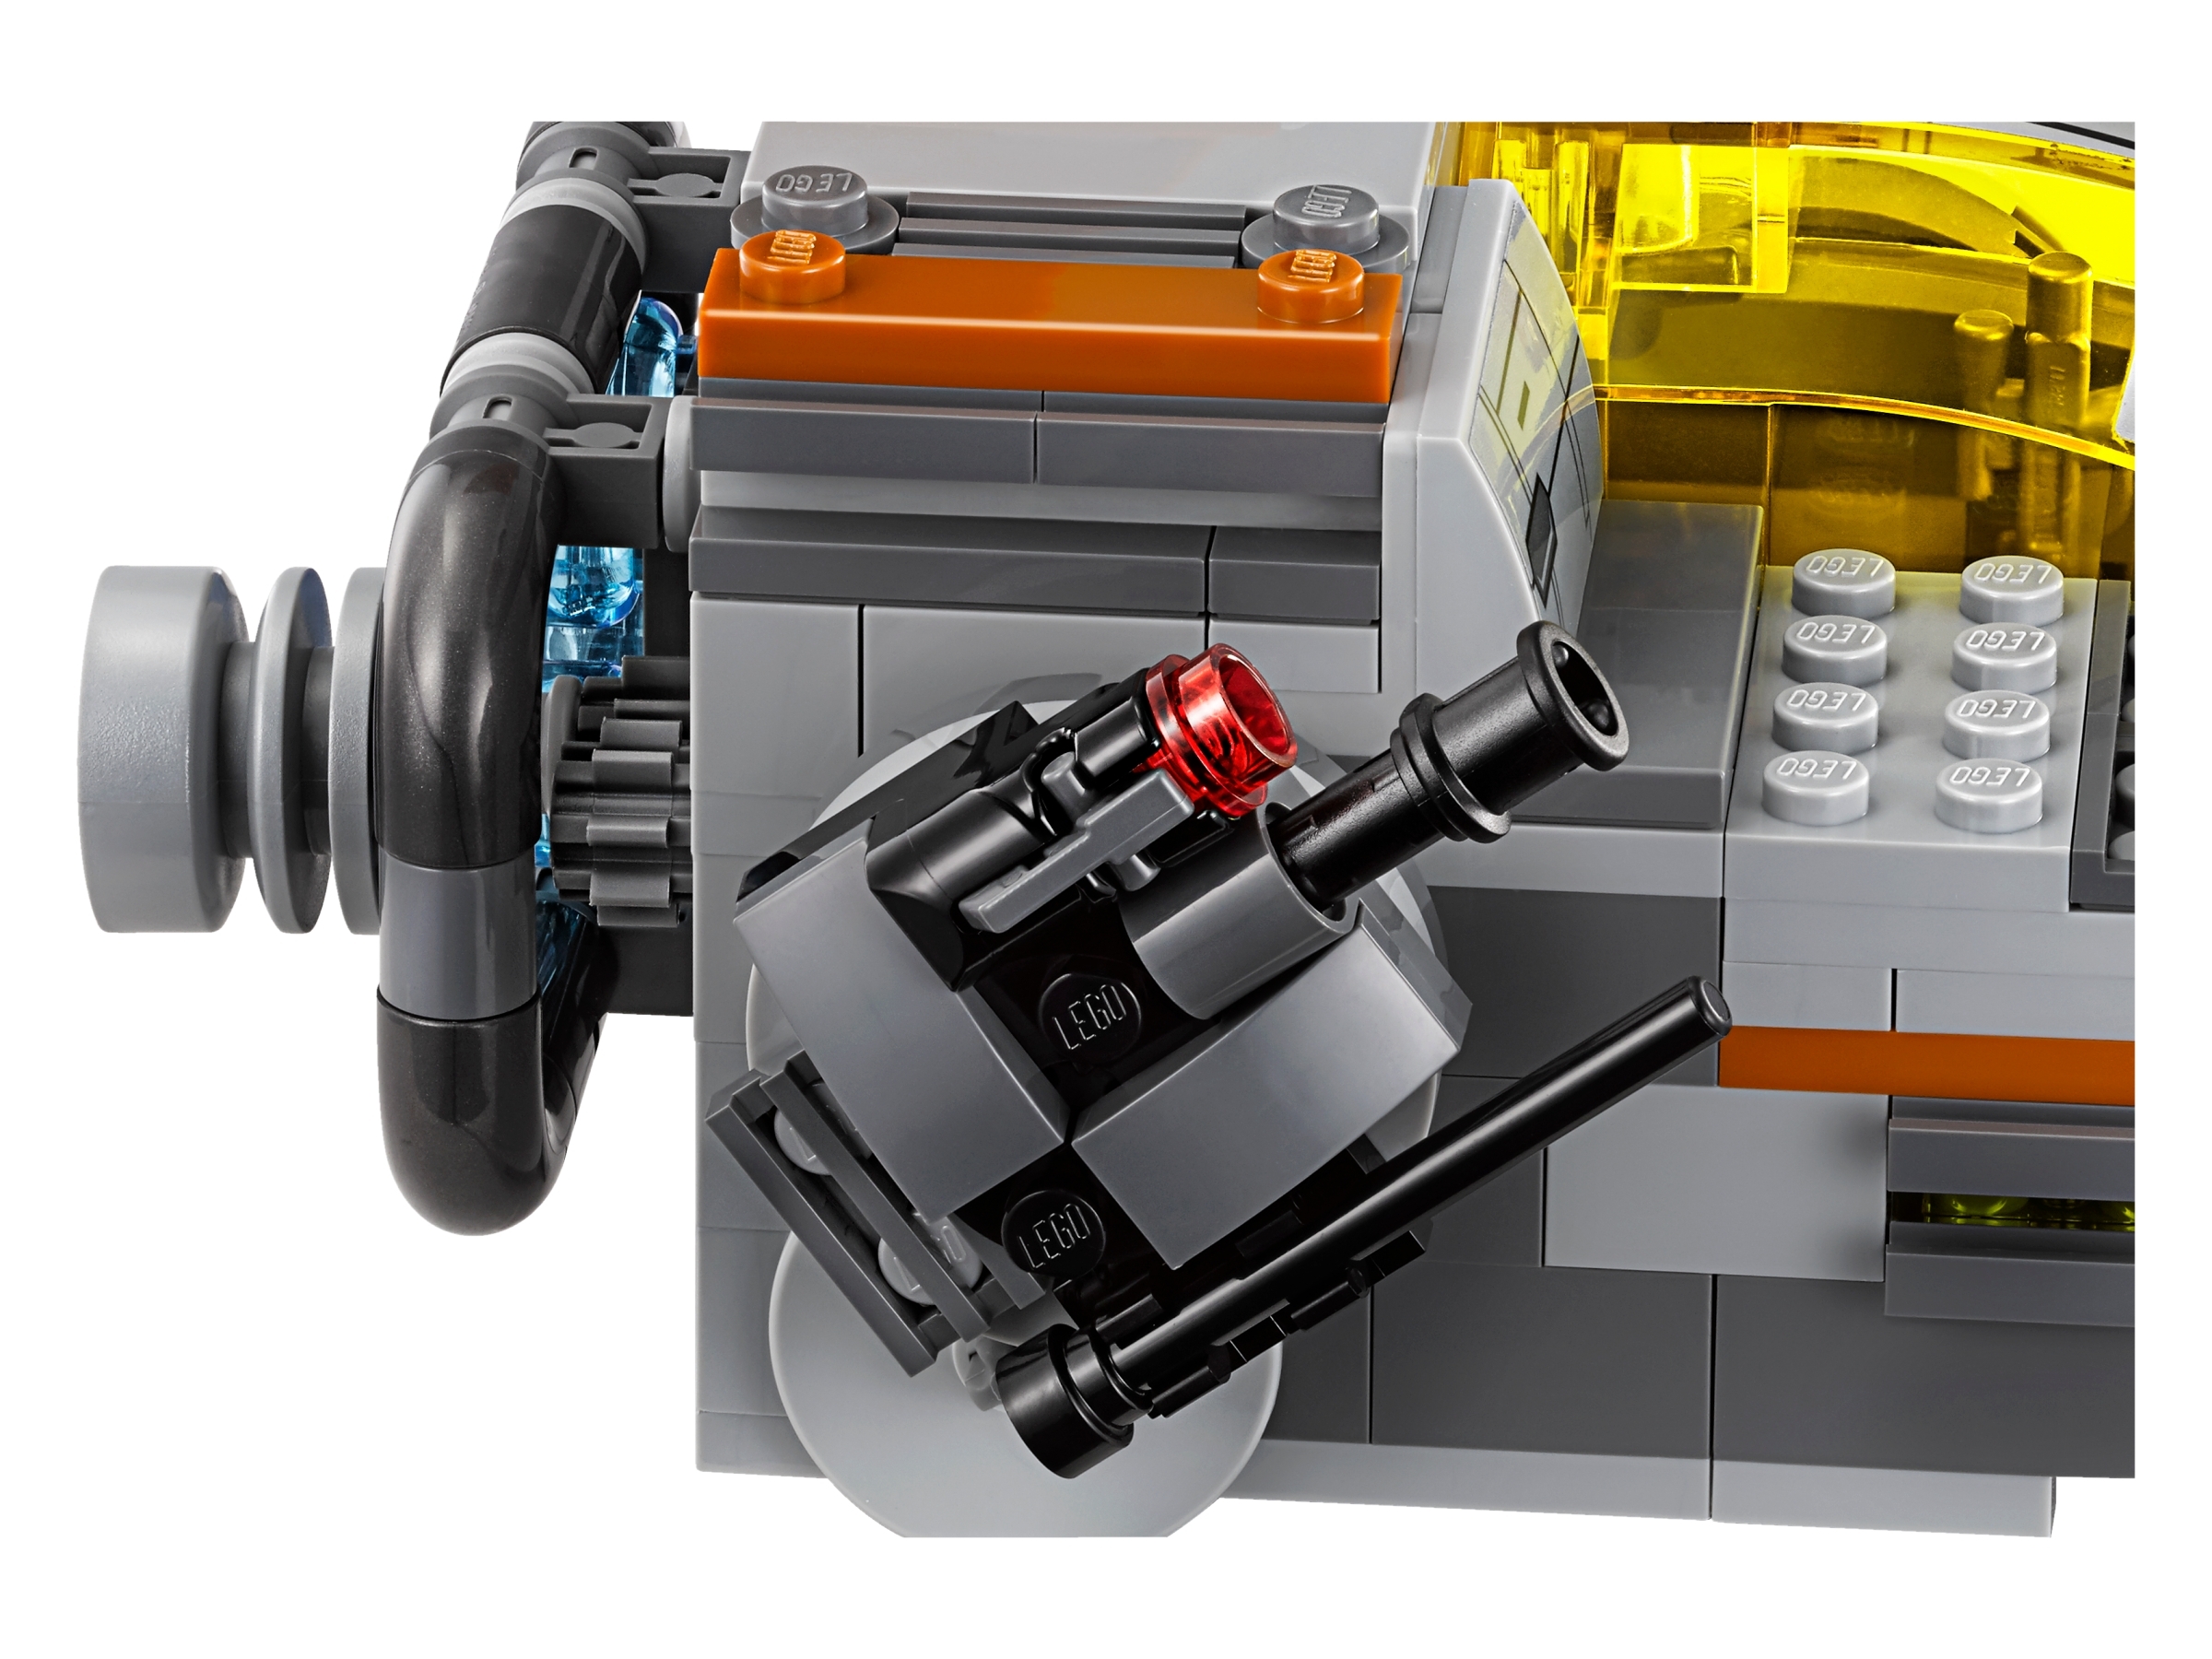 New, 2017 LEGO Disney Star Wars 75176 Rose Tico w/ small blaster minifig ONLY 